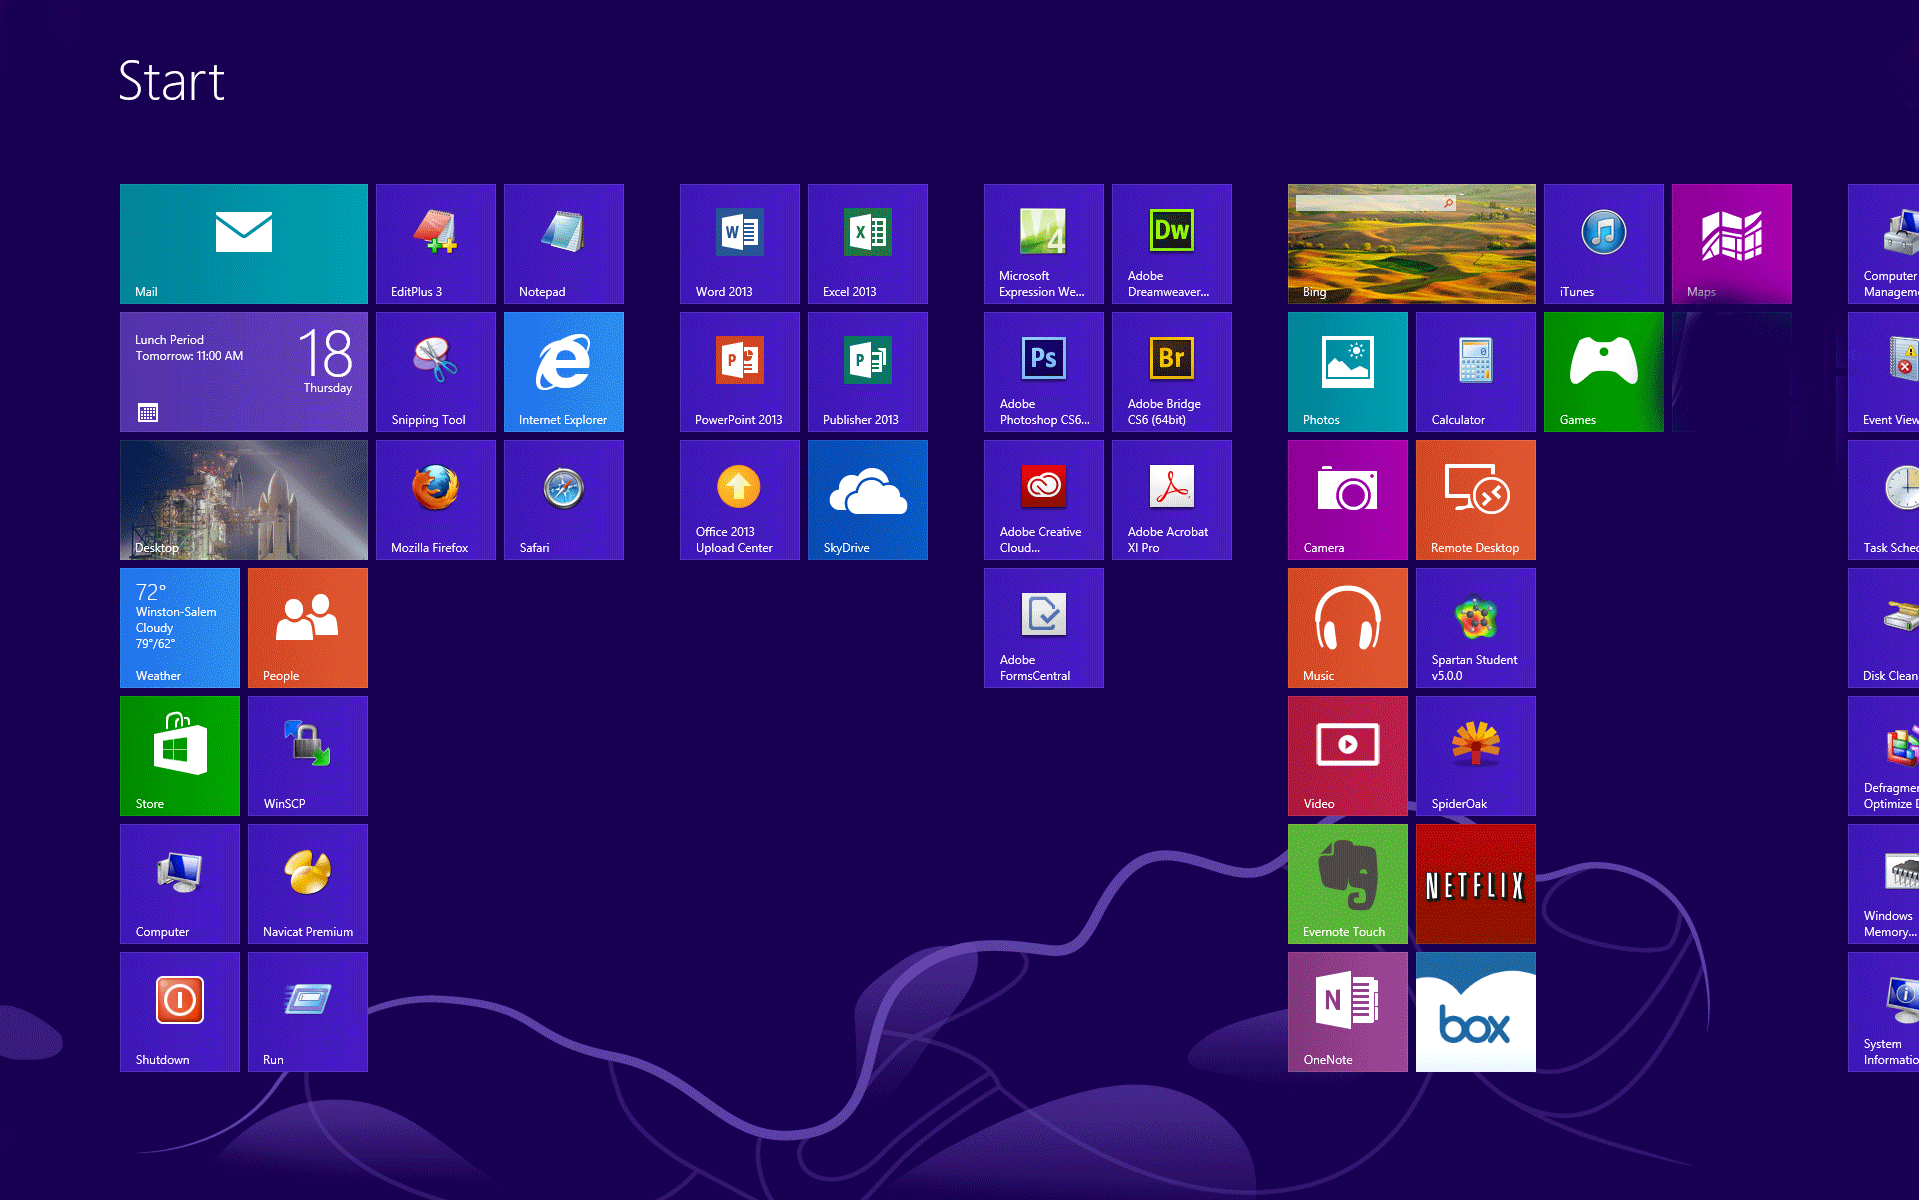 windows 8 features